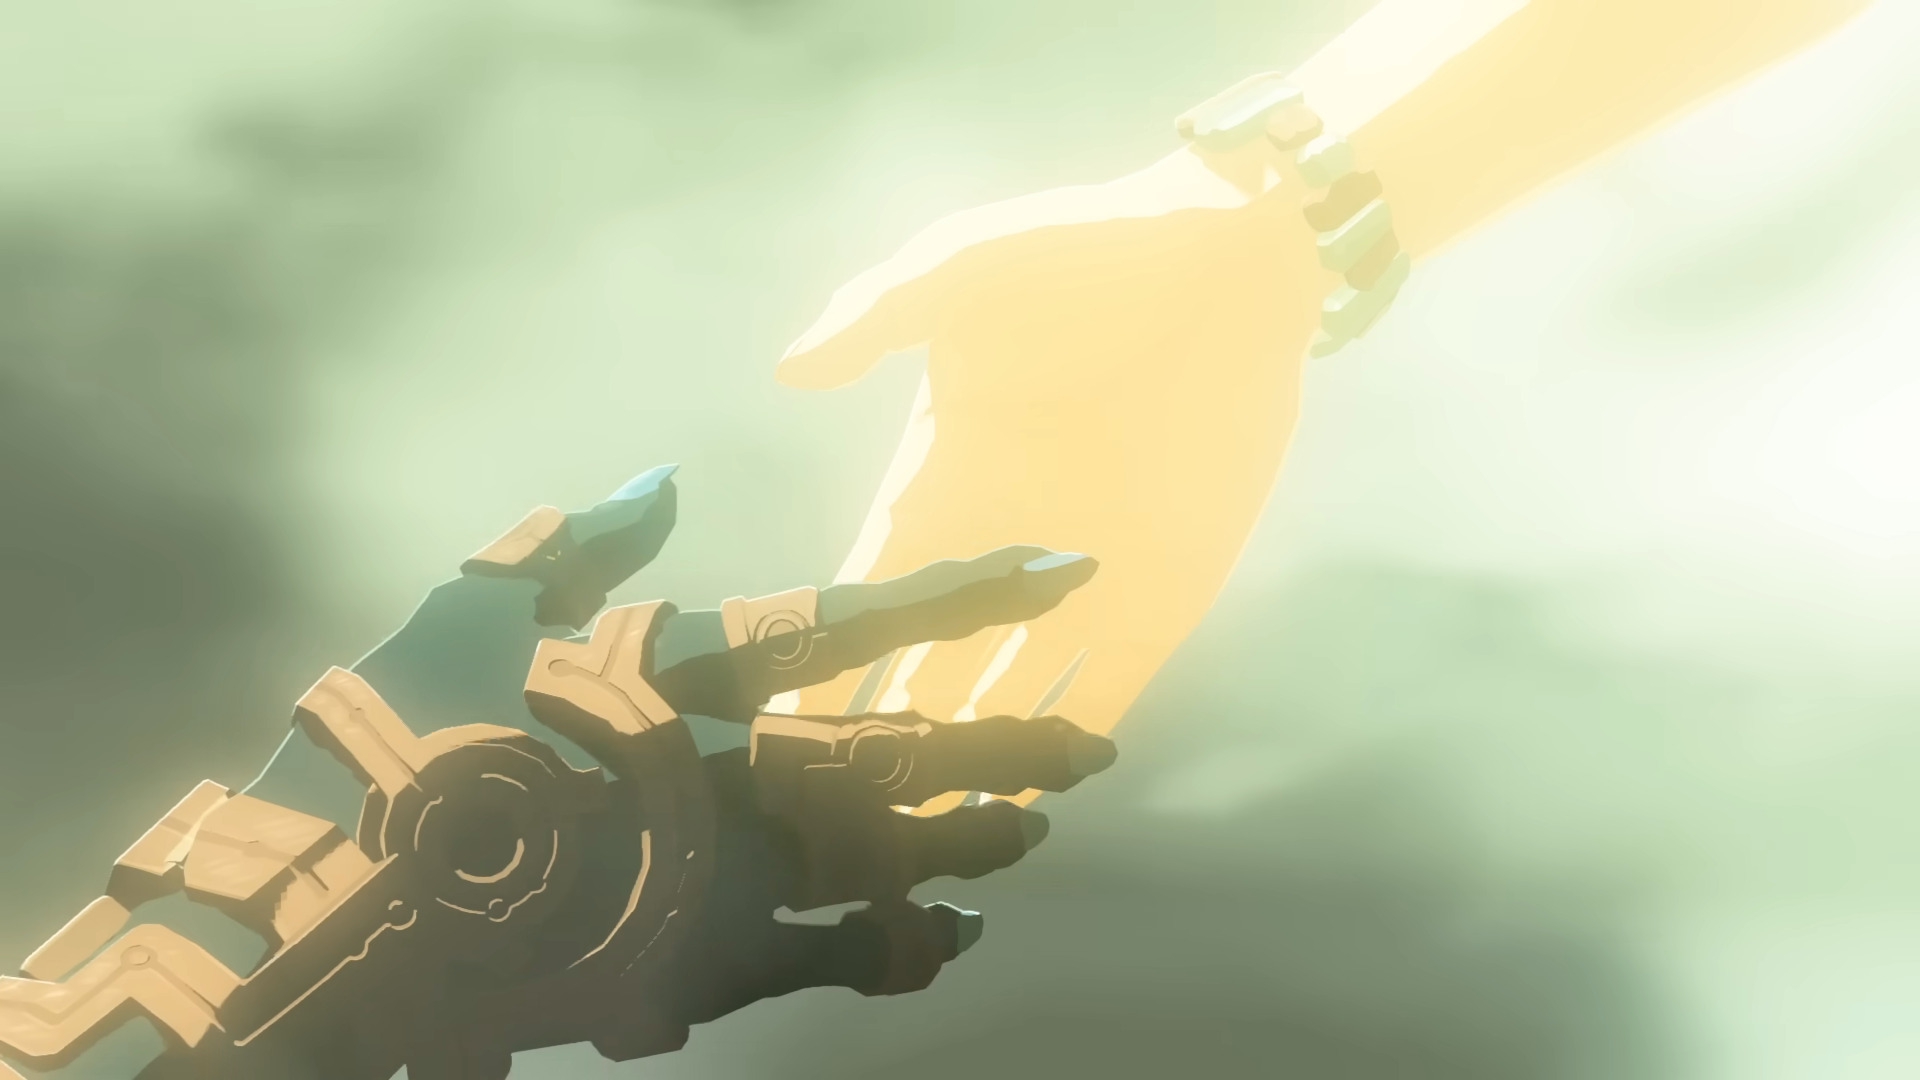 Link's hand reaching to meet the feminine figure's hand